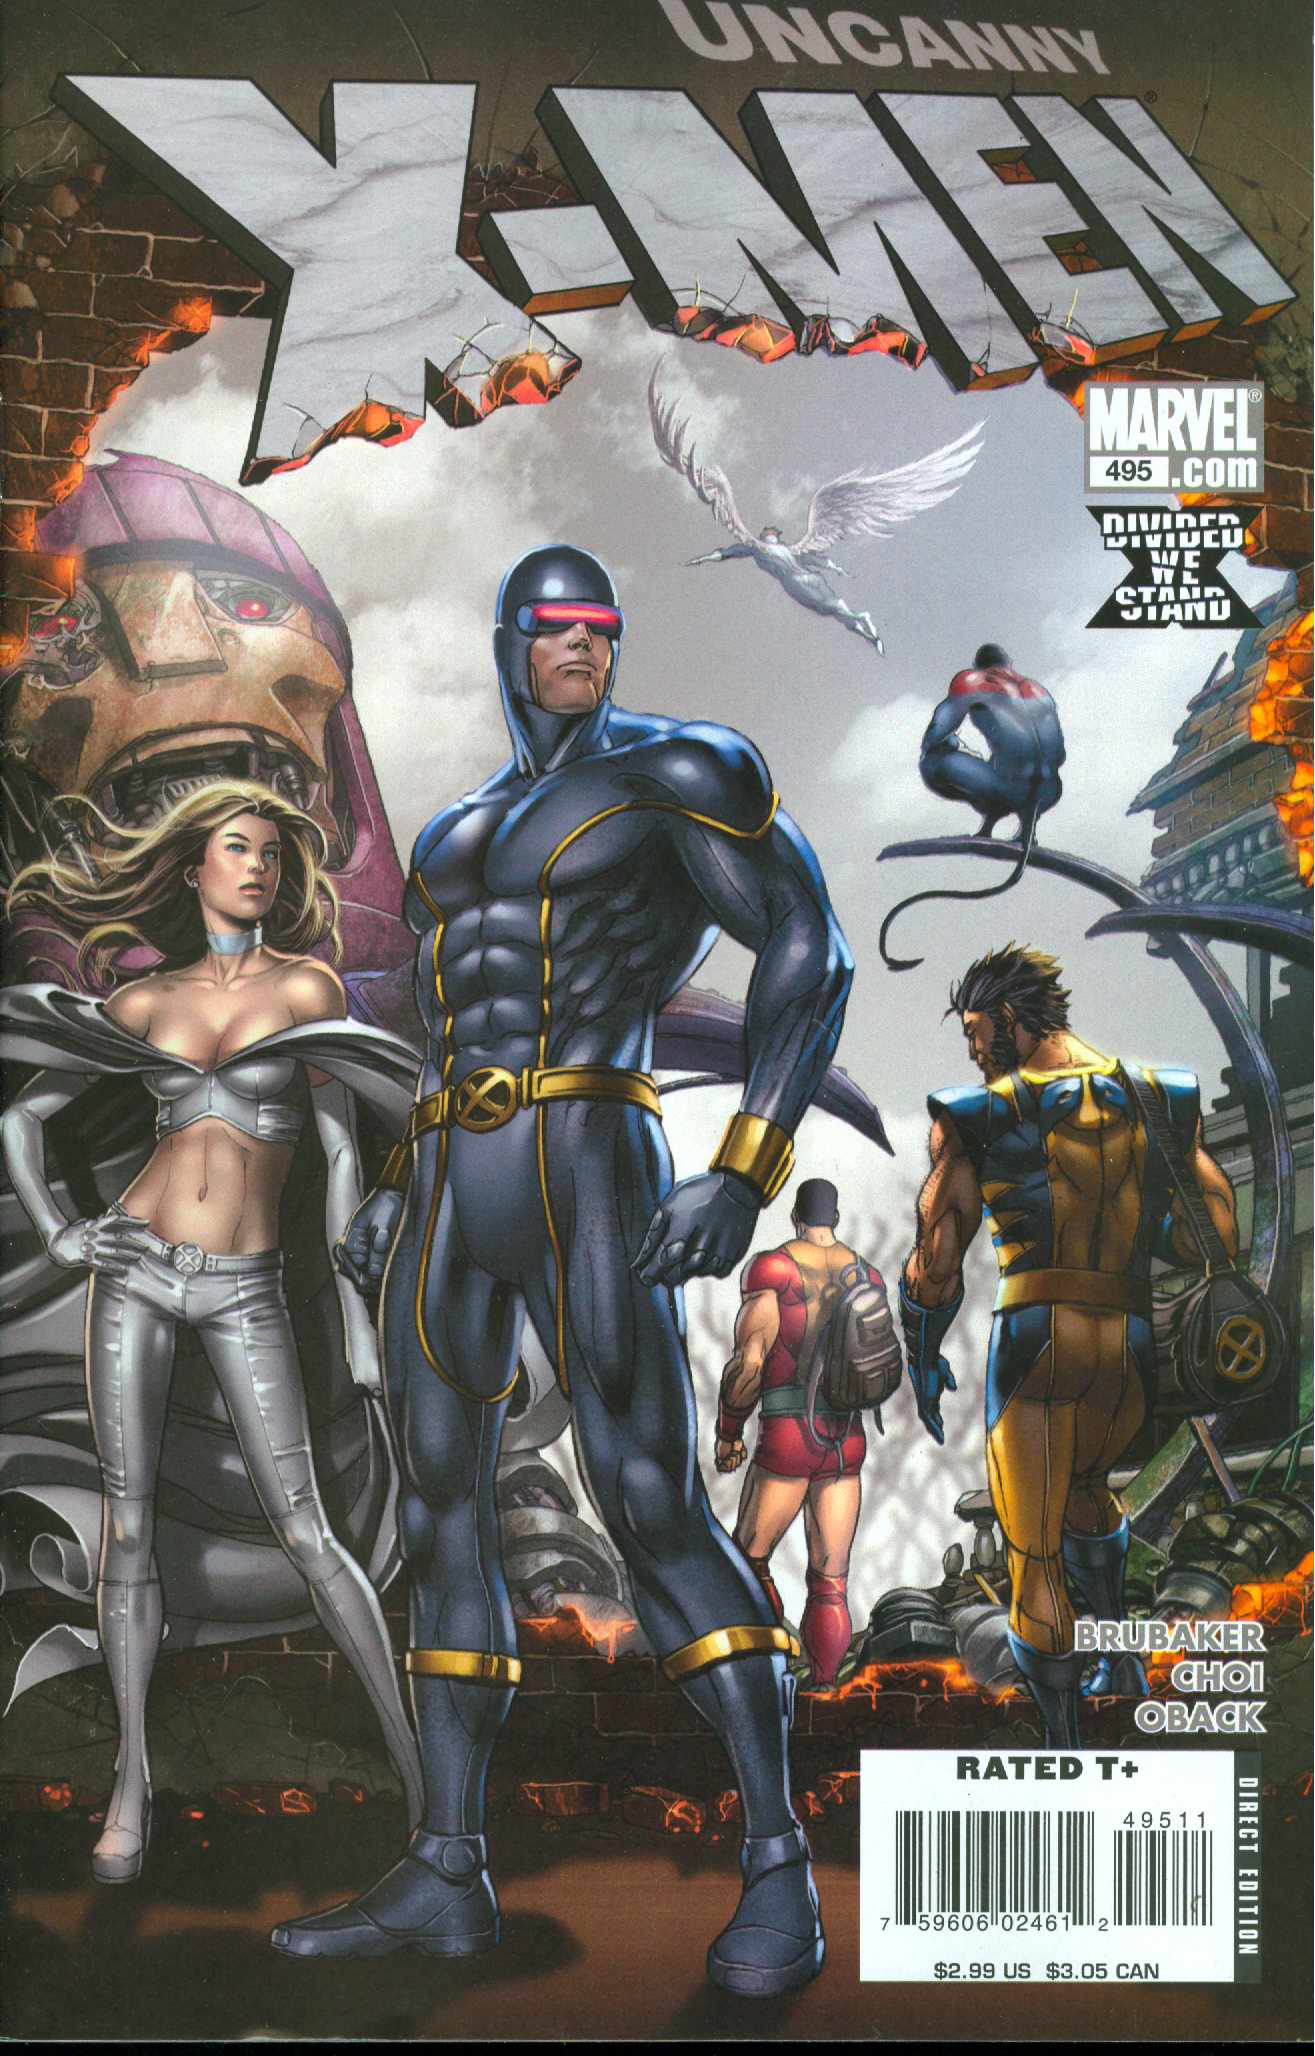 Uncanny X-Men #495